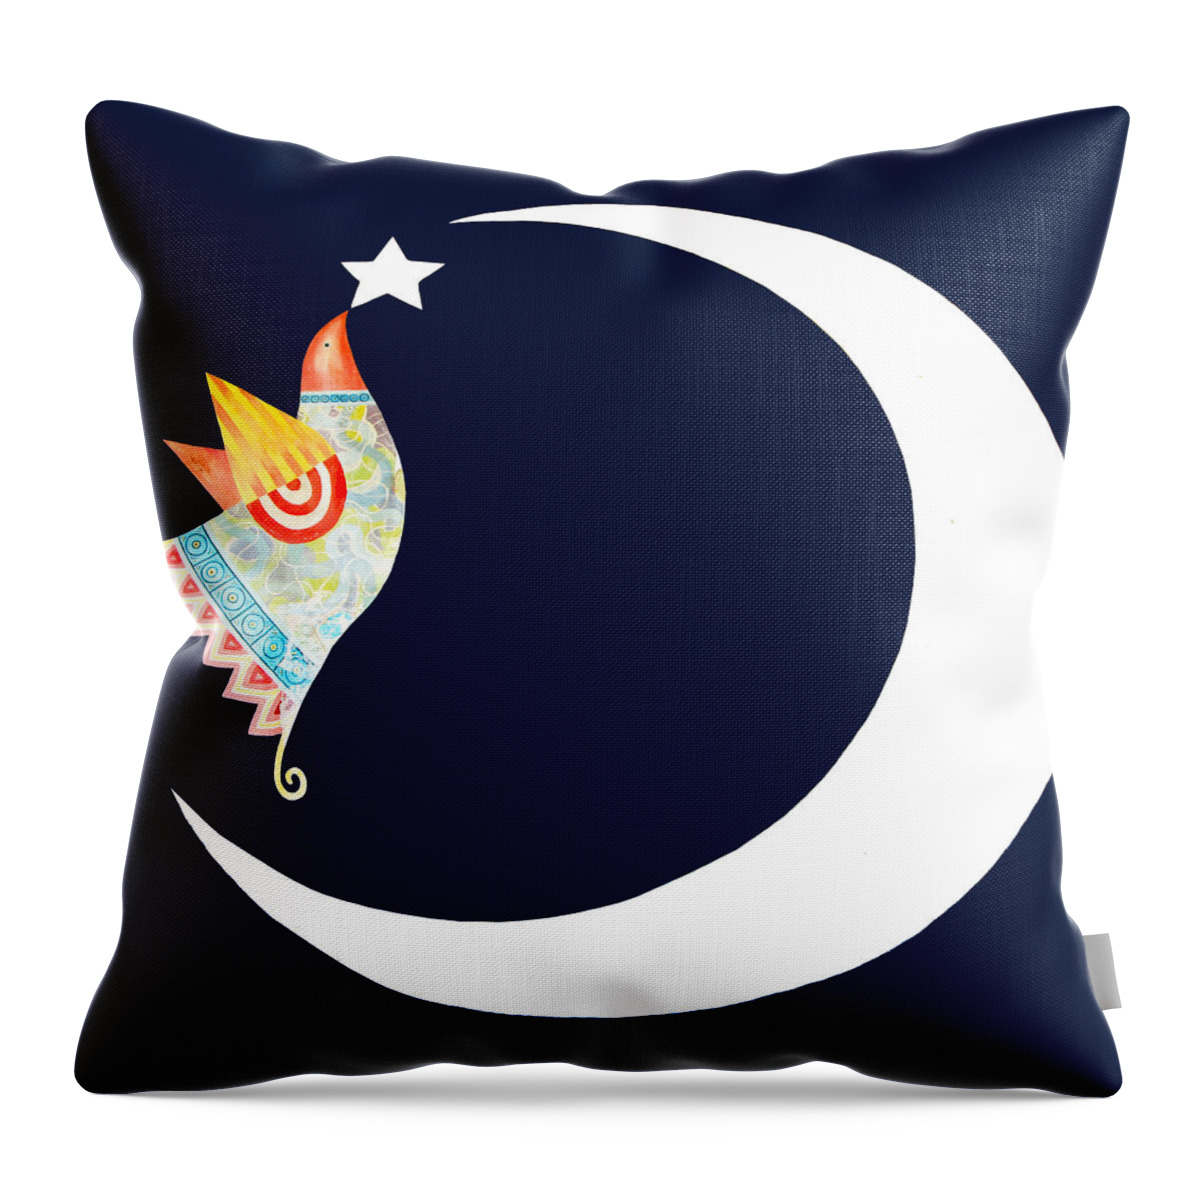 Star Throw Pillow featuring the photograph Star Bird by Munir Alawi